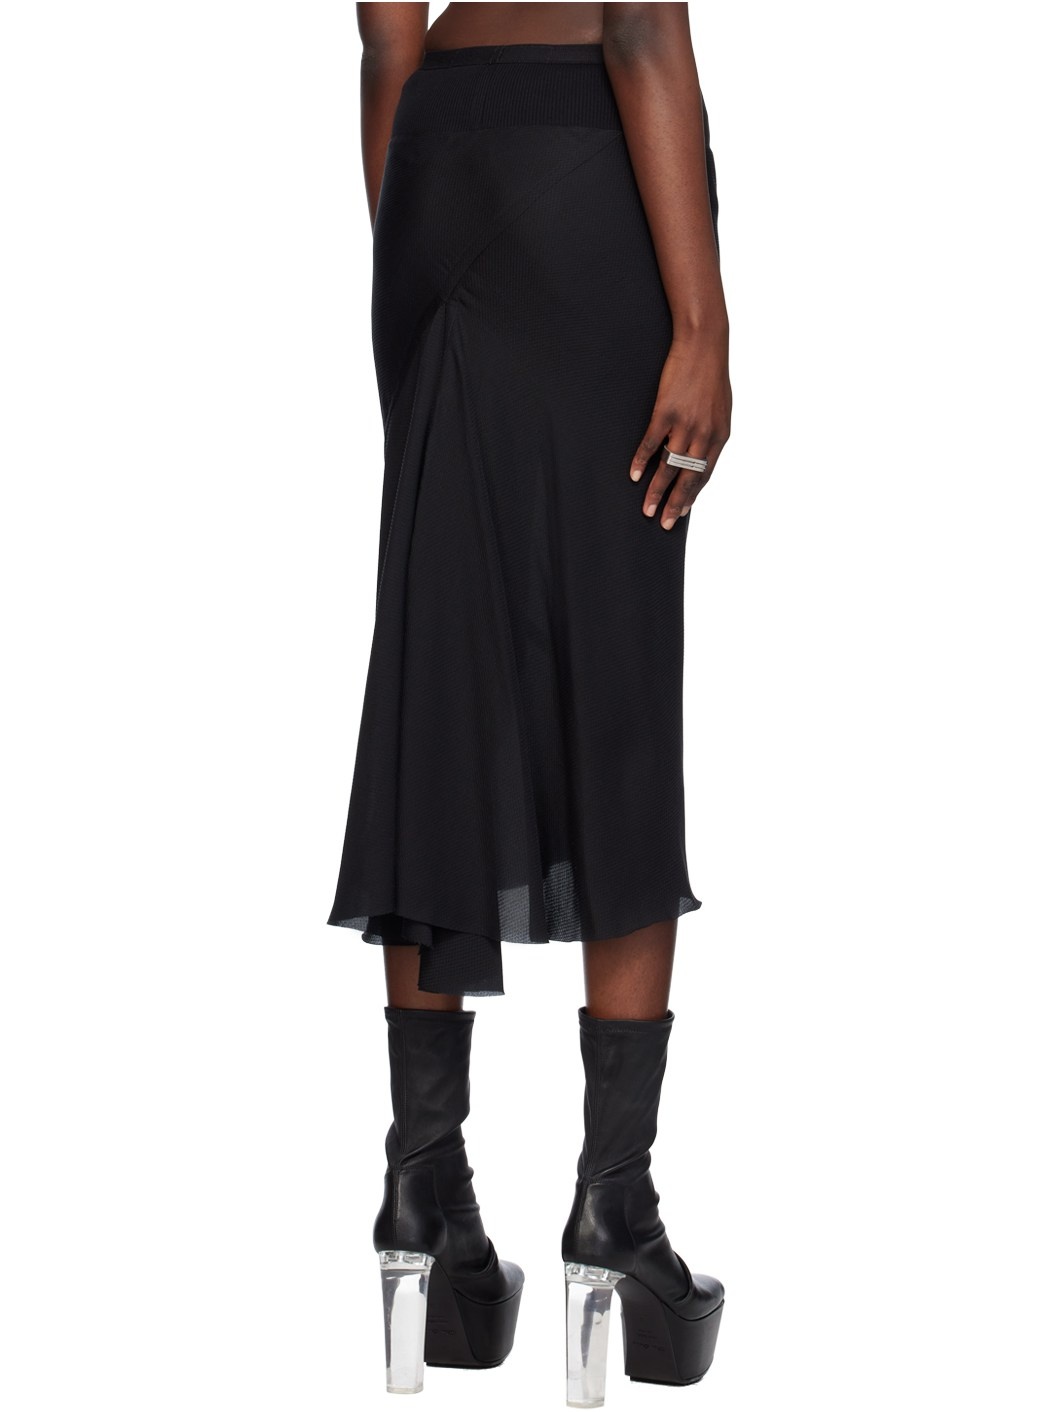 Black A Line Midi Skirt - 3